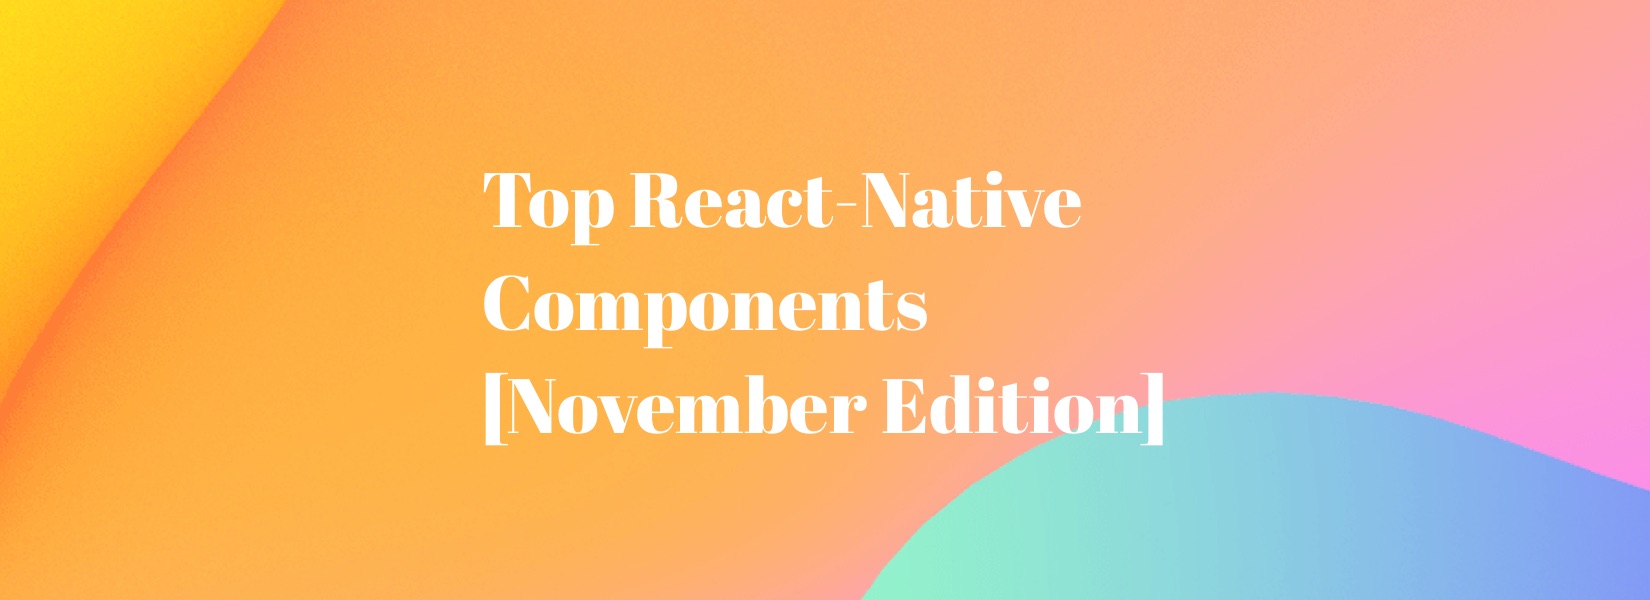 Top React-Native Components (November Edition)